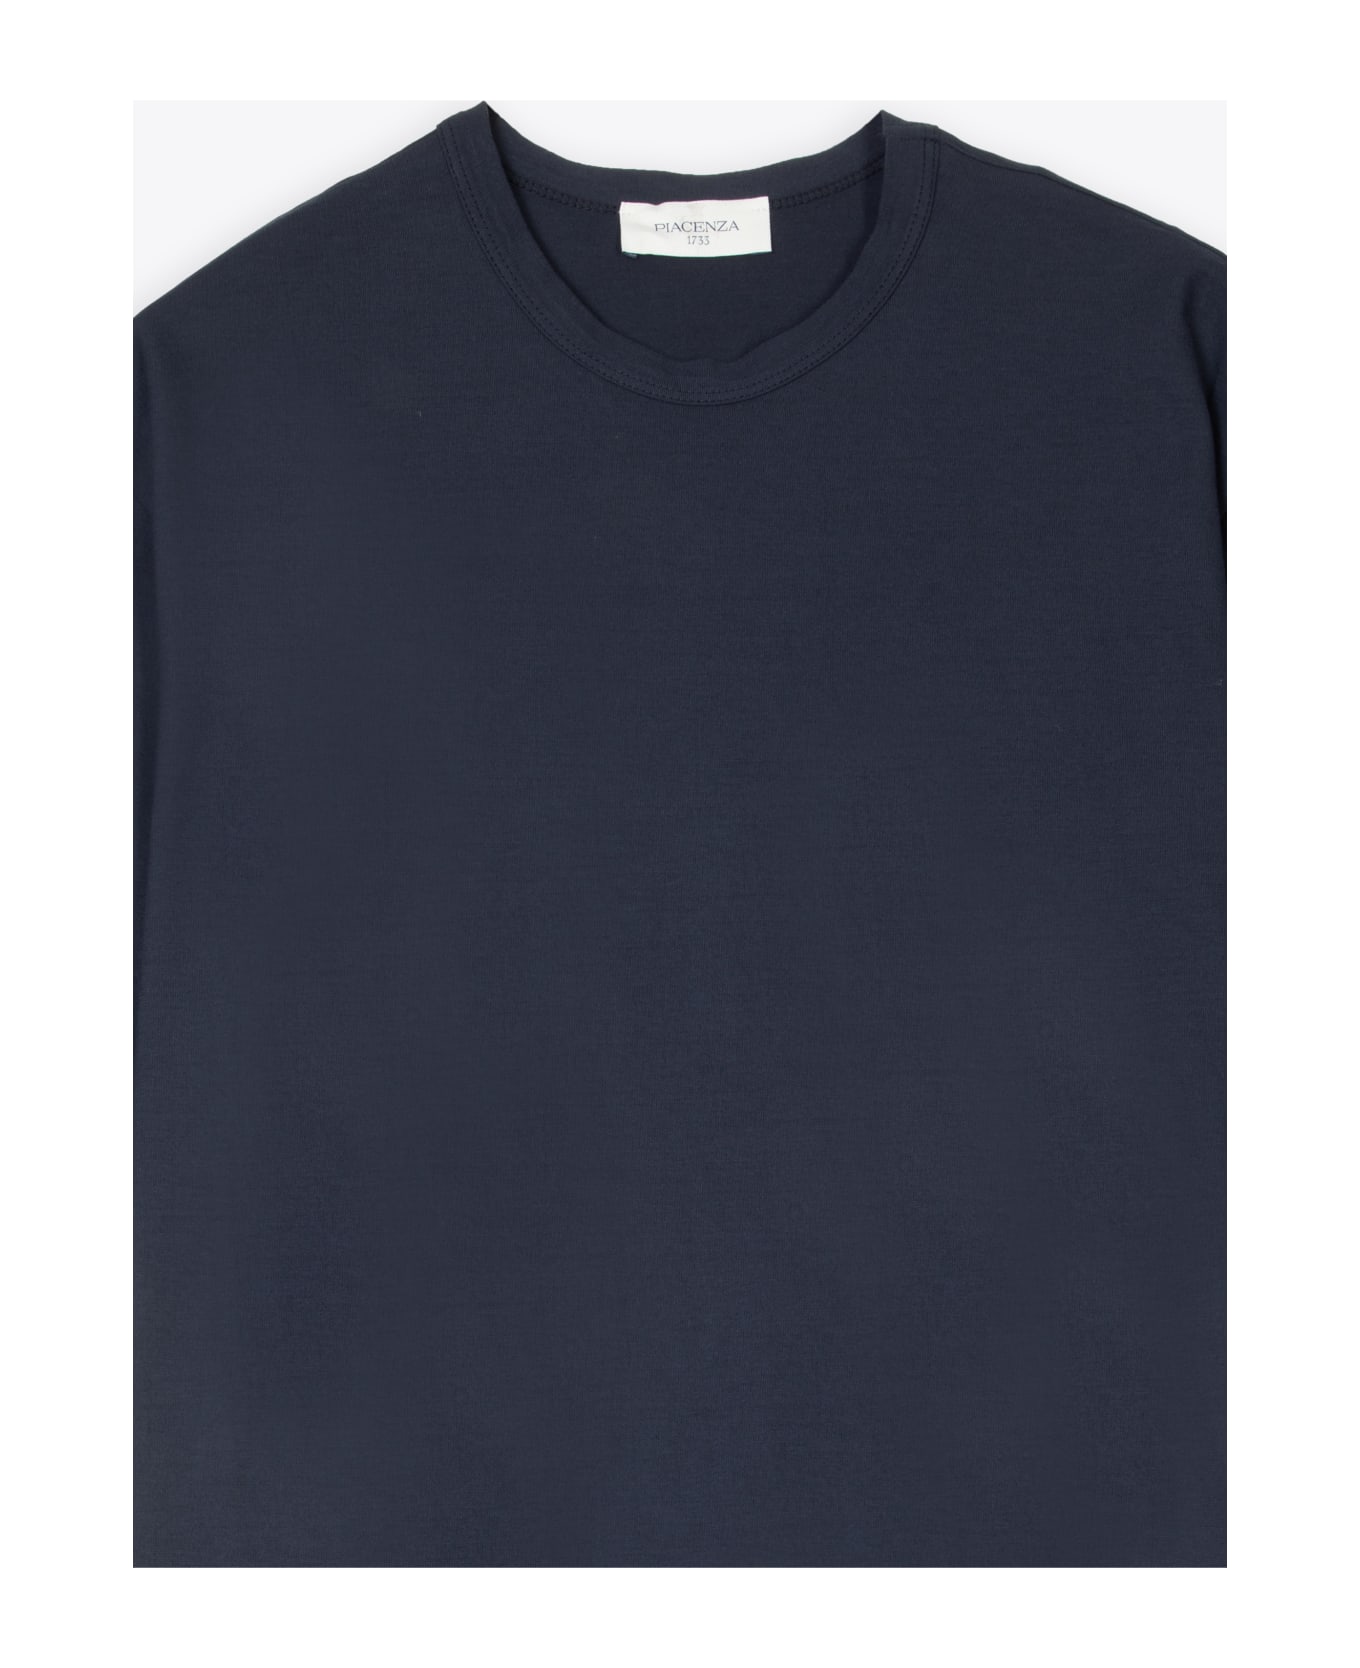 Piacenza Cashmere T-shirt Dark blue lightweight cotton t-shirt - Blu scuro シャツ